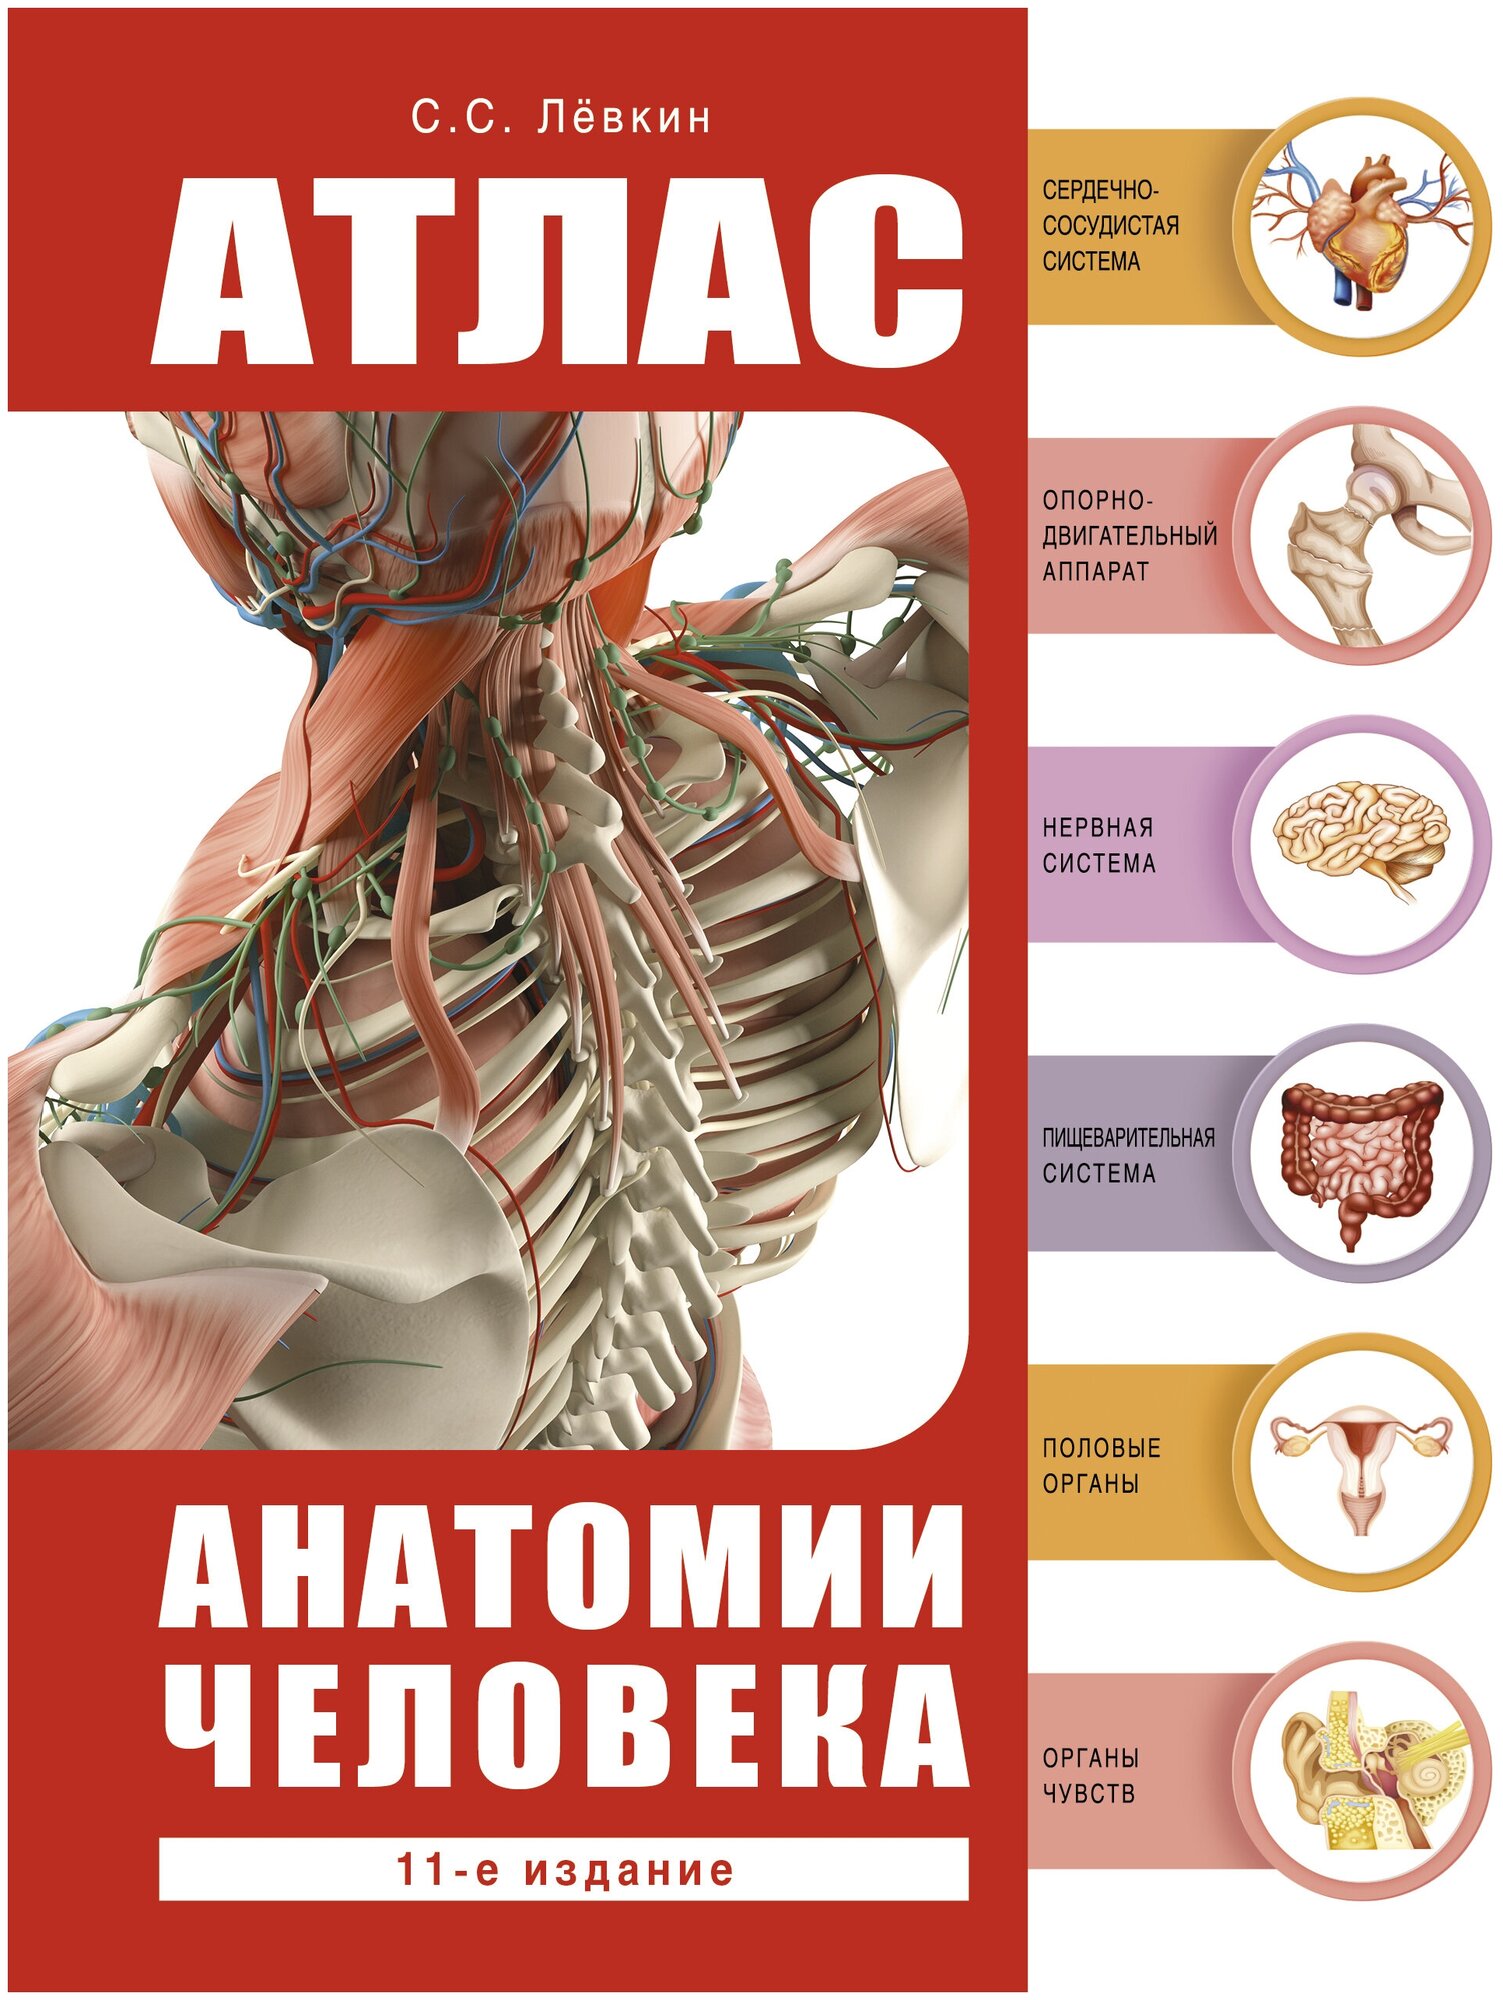 Атлас анатомии человека 11 издание Пособие Левкин СС16+